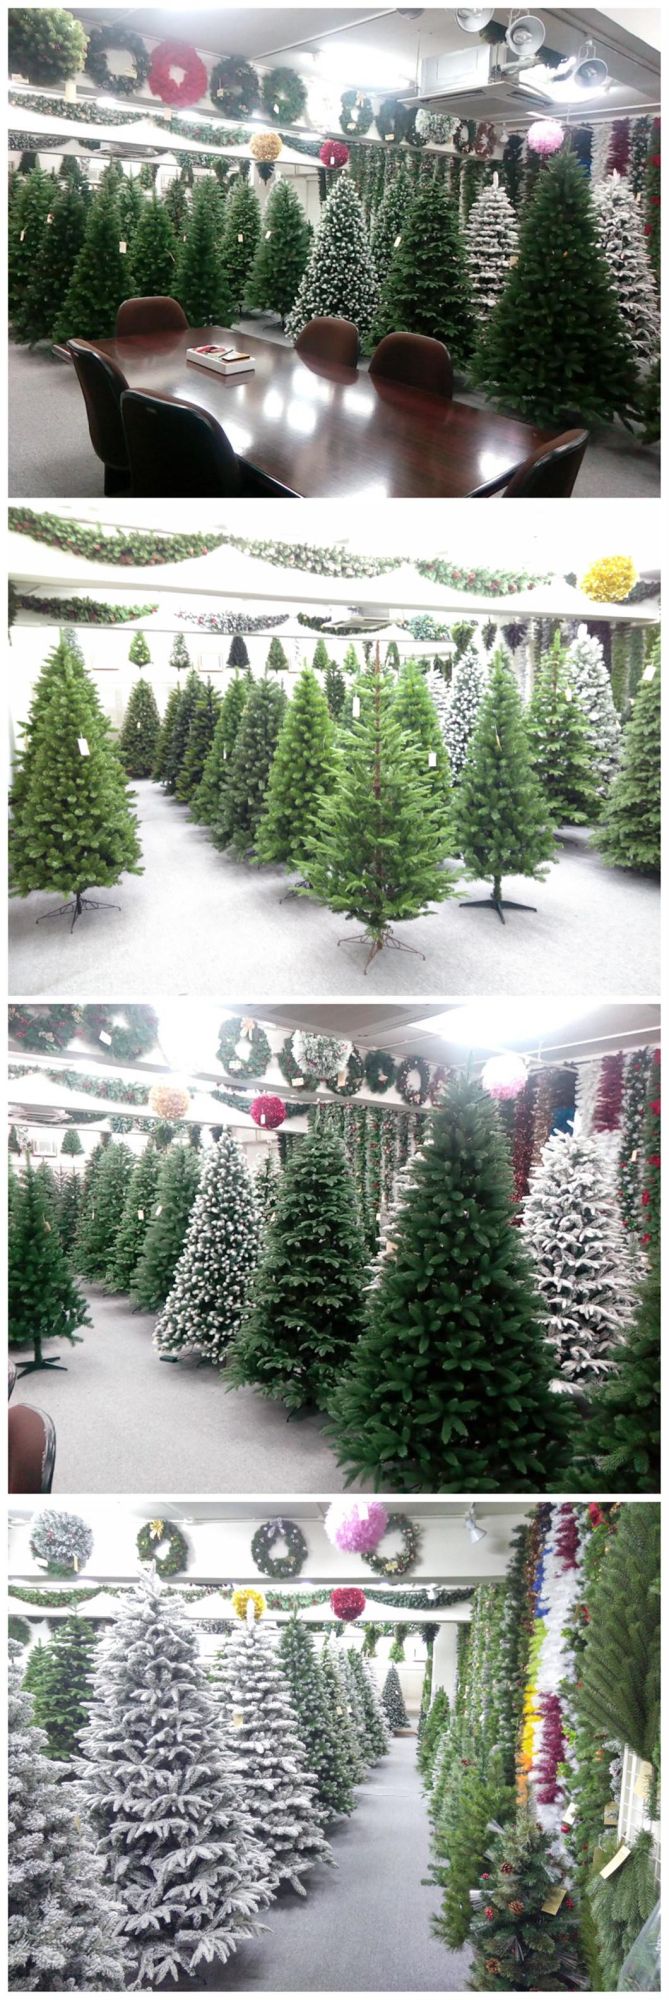 210cm Green PVC Tips Artificial Christmas Wedding Decoration Gift Tree